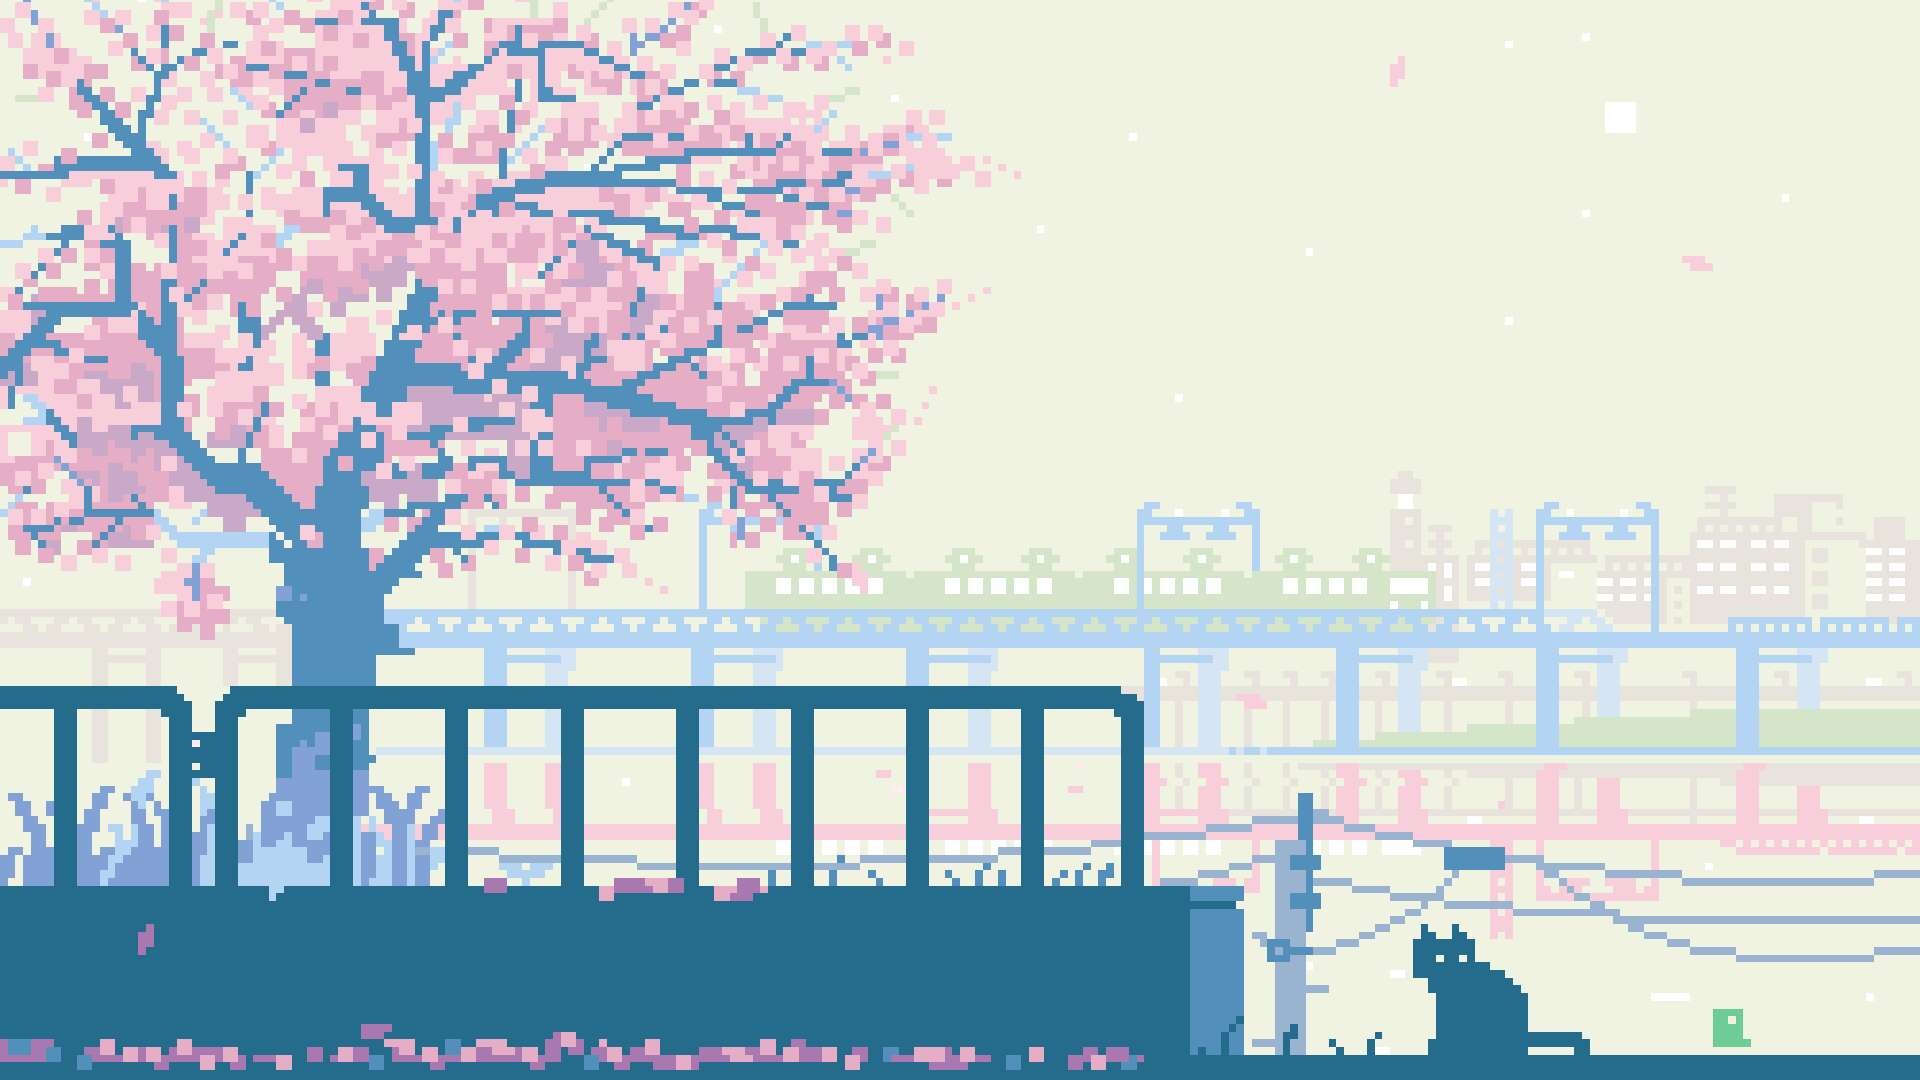 Girly: A cherry blossom, Japanese cherry, Sakura, Pink flowering tress, The city view. 1920x1080 Full HD Wallpaper.